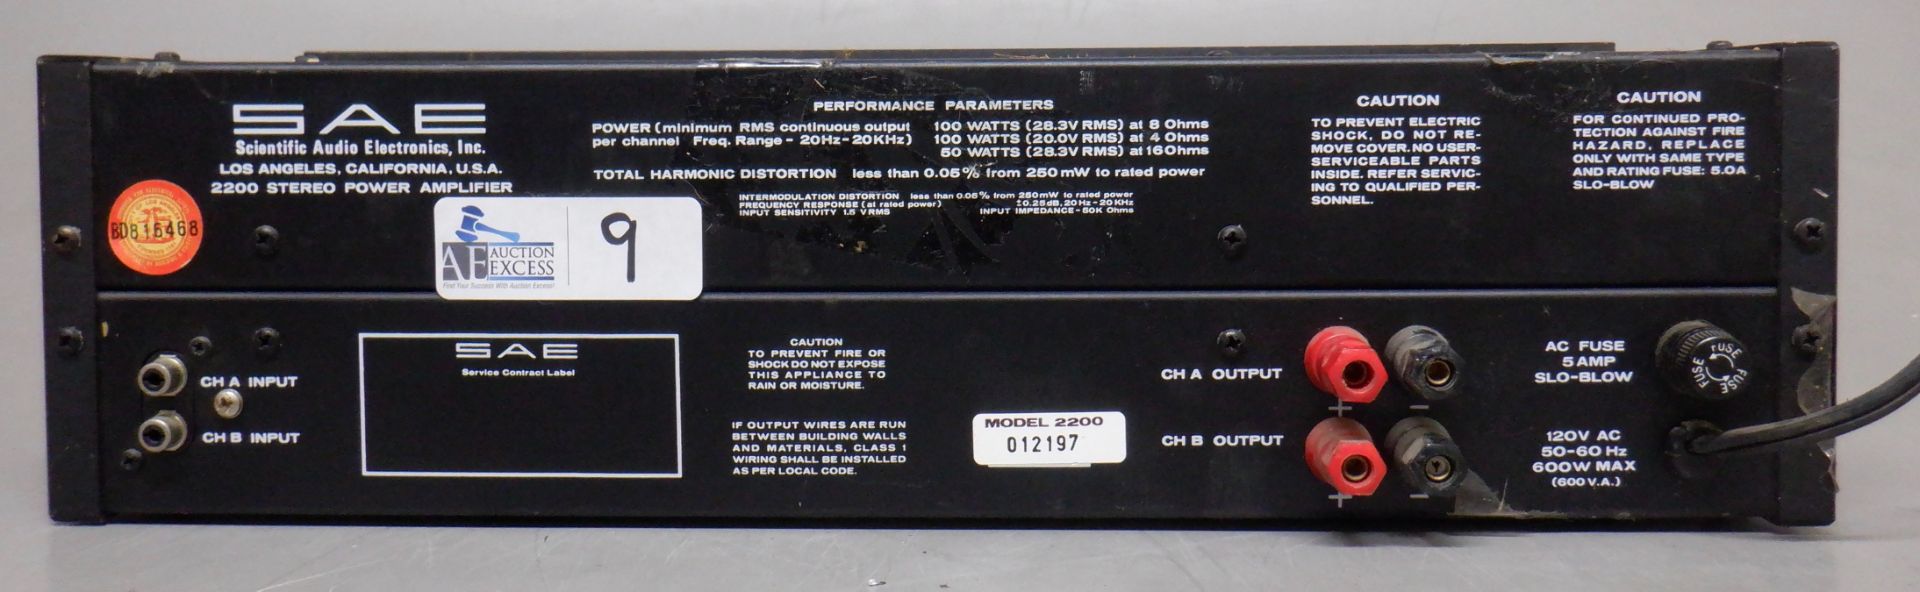 SAE 2200 POWER AMP - Image 2 of 2